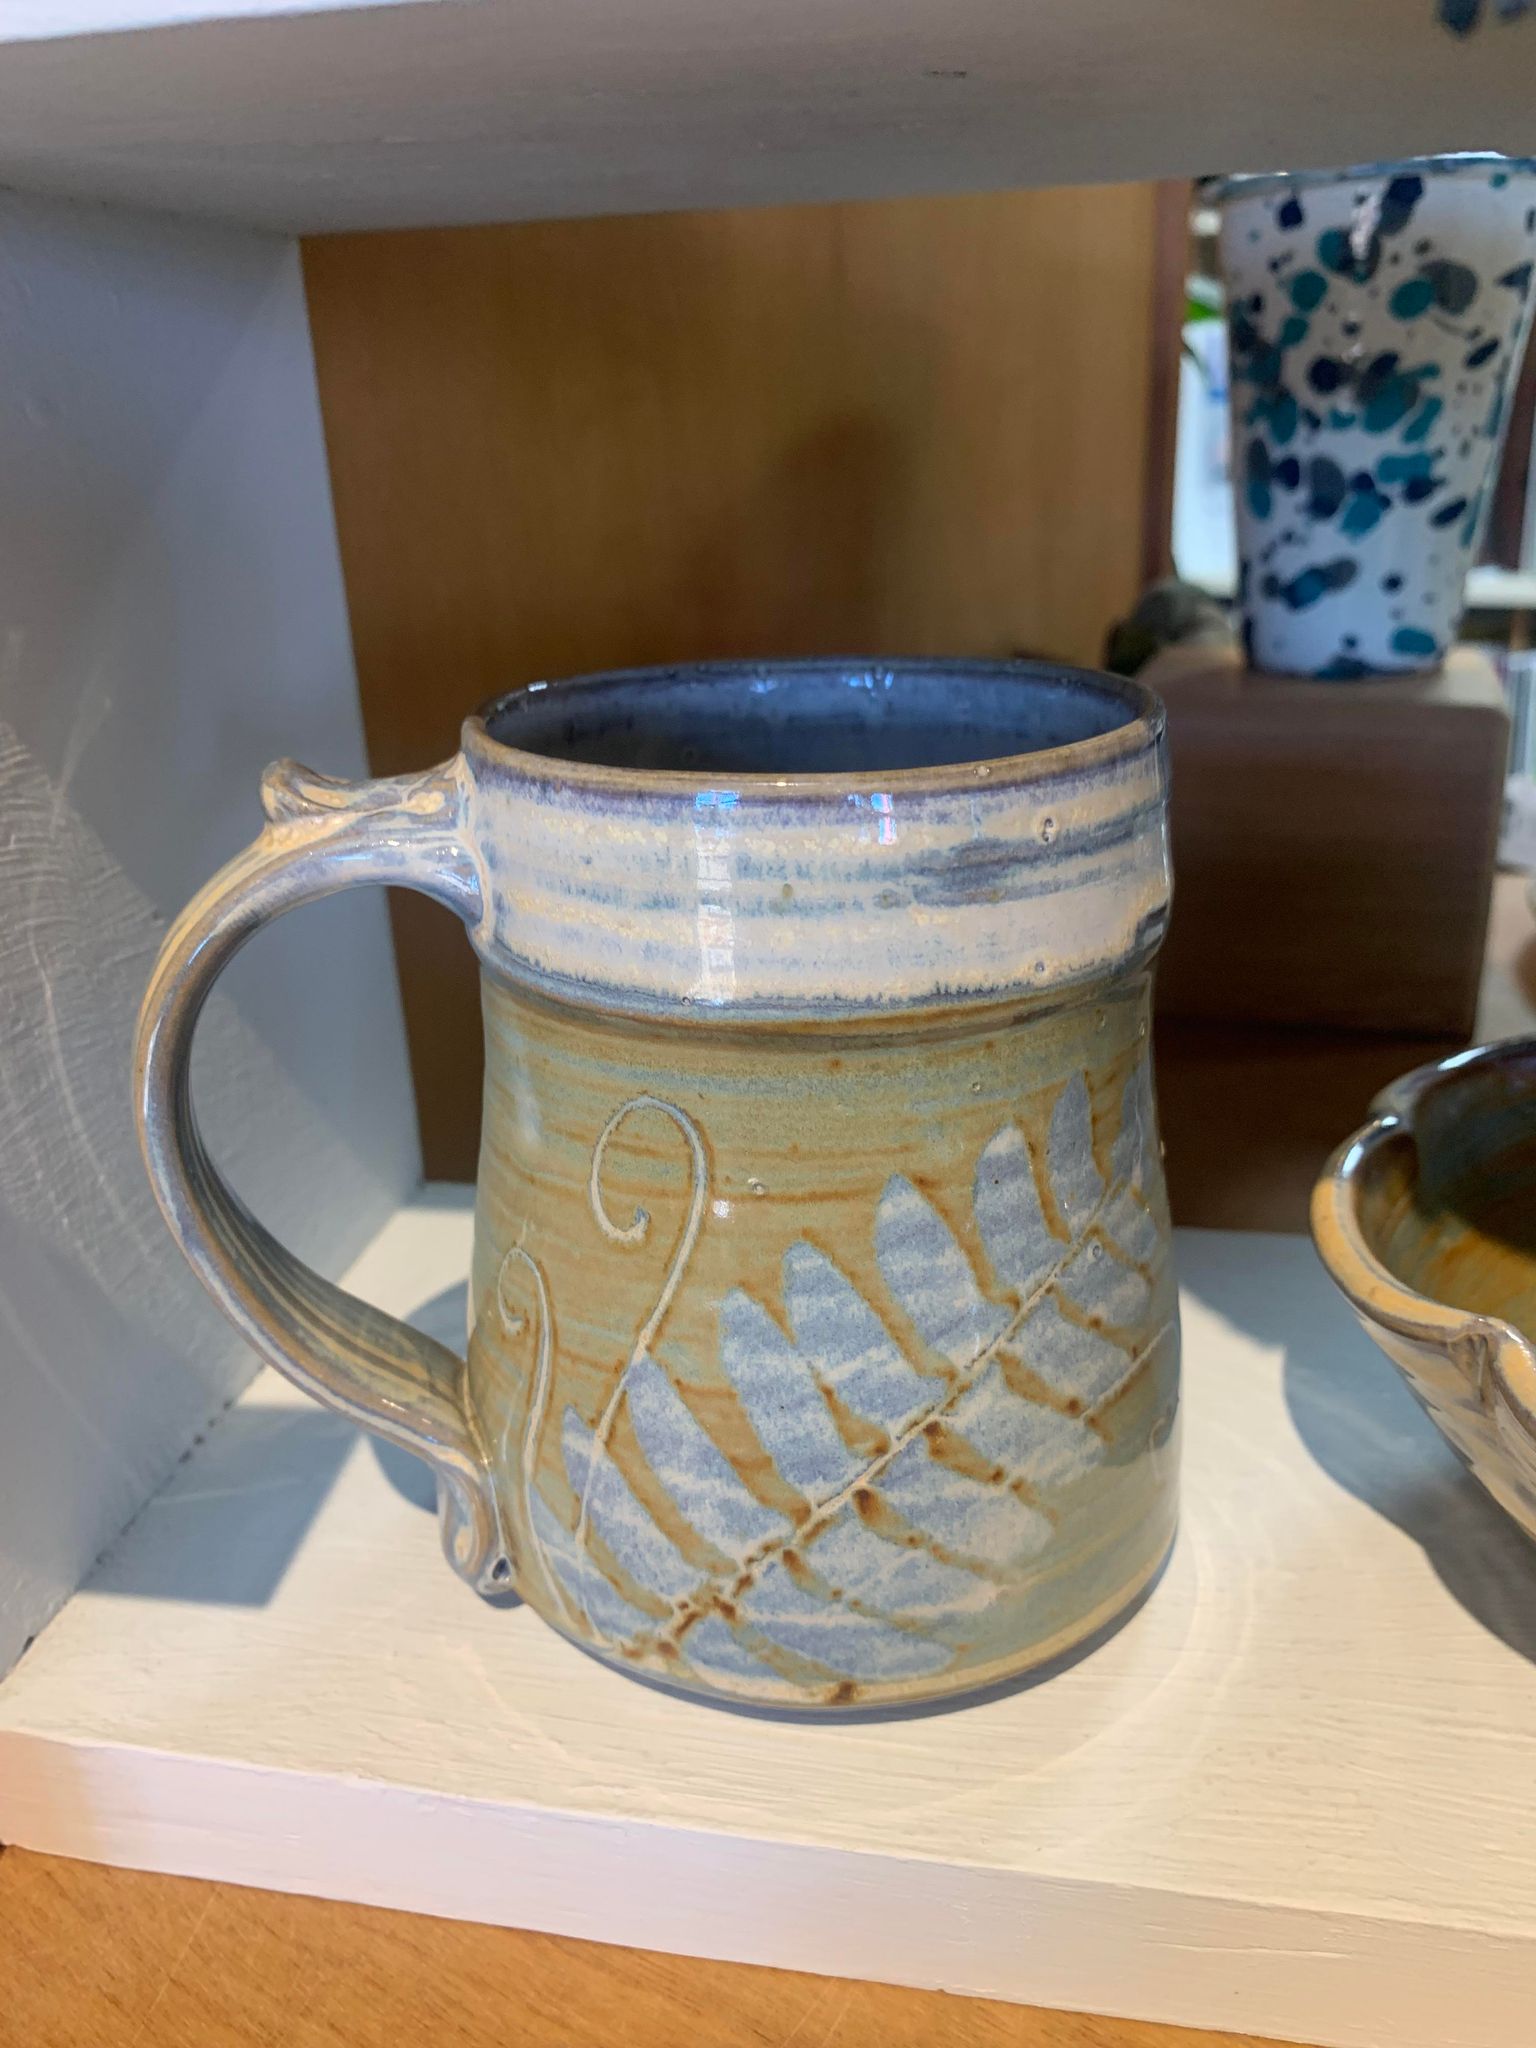 A Perry Munn Pottery Fern Mug sits on a candle holder shelf.